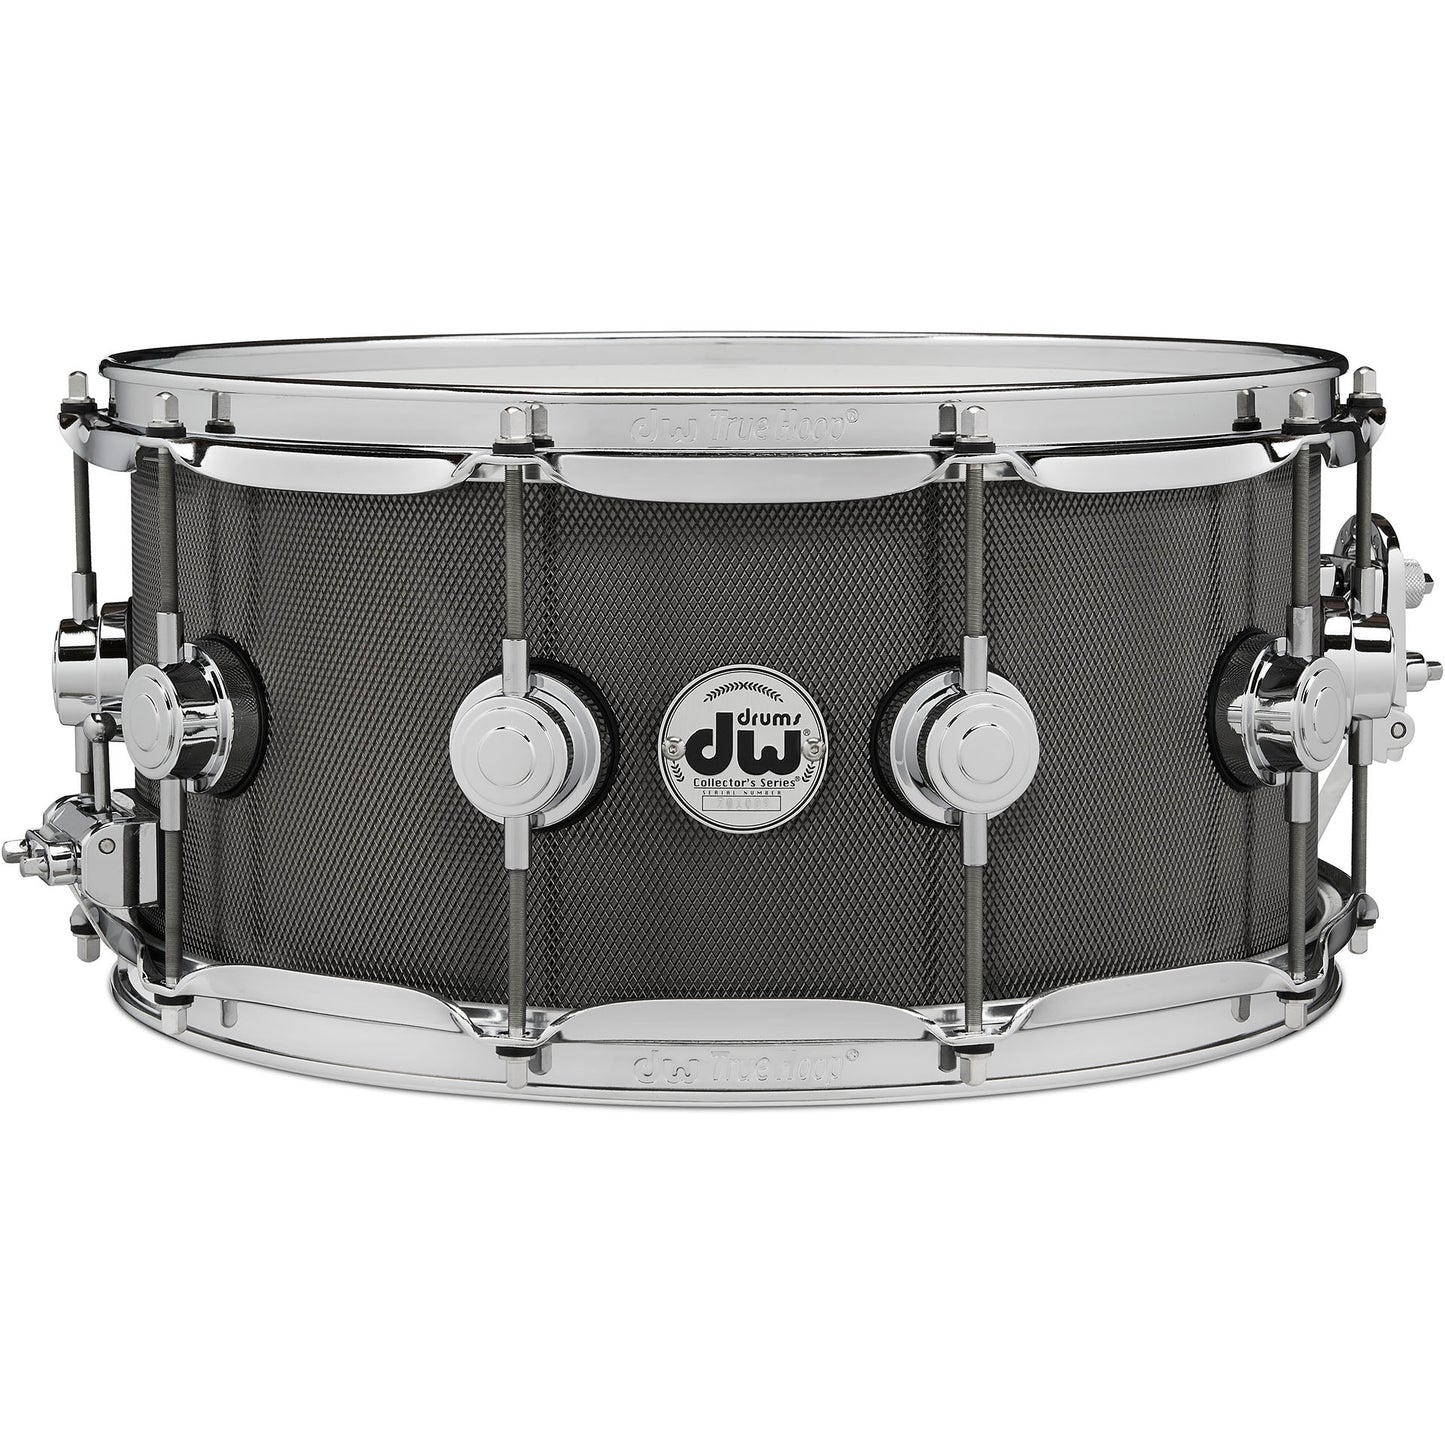 DW Collector's Series 6.5x14 Black Nickel Knurled Steel Snare Drum